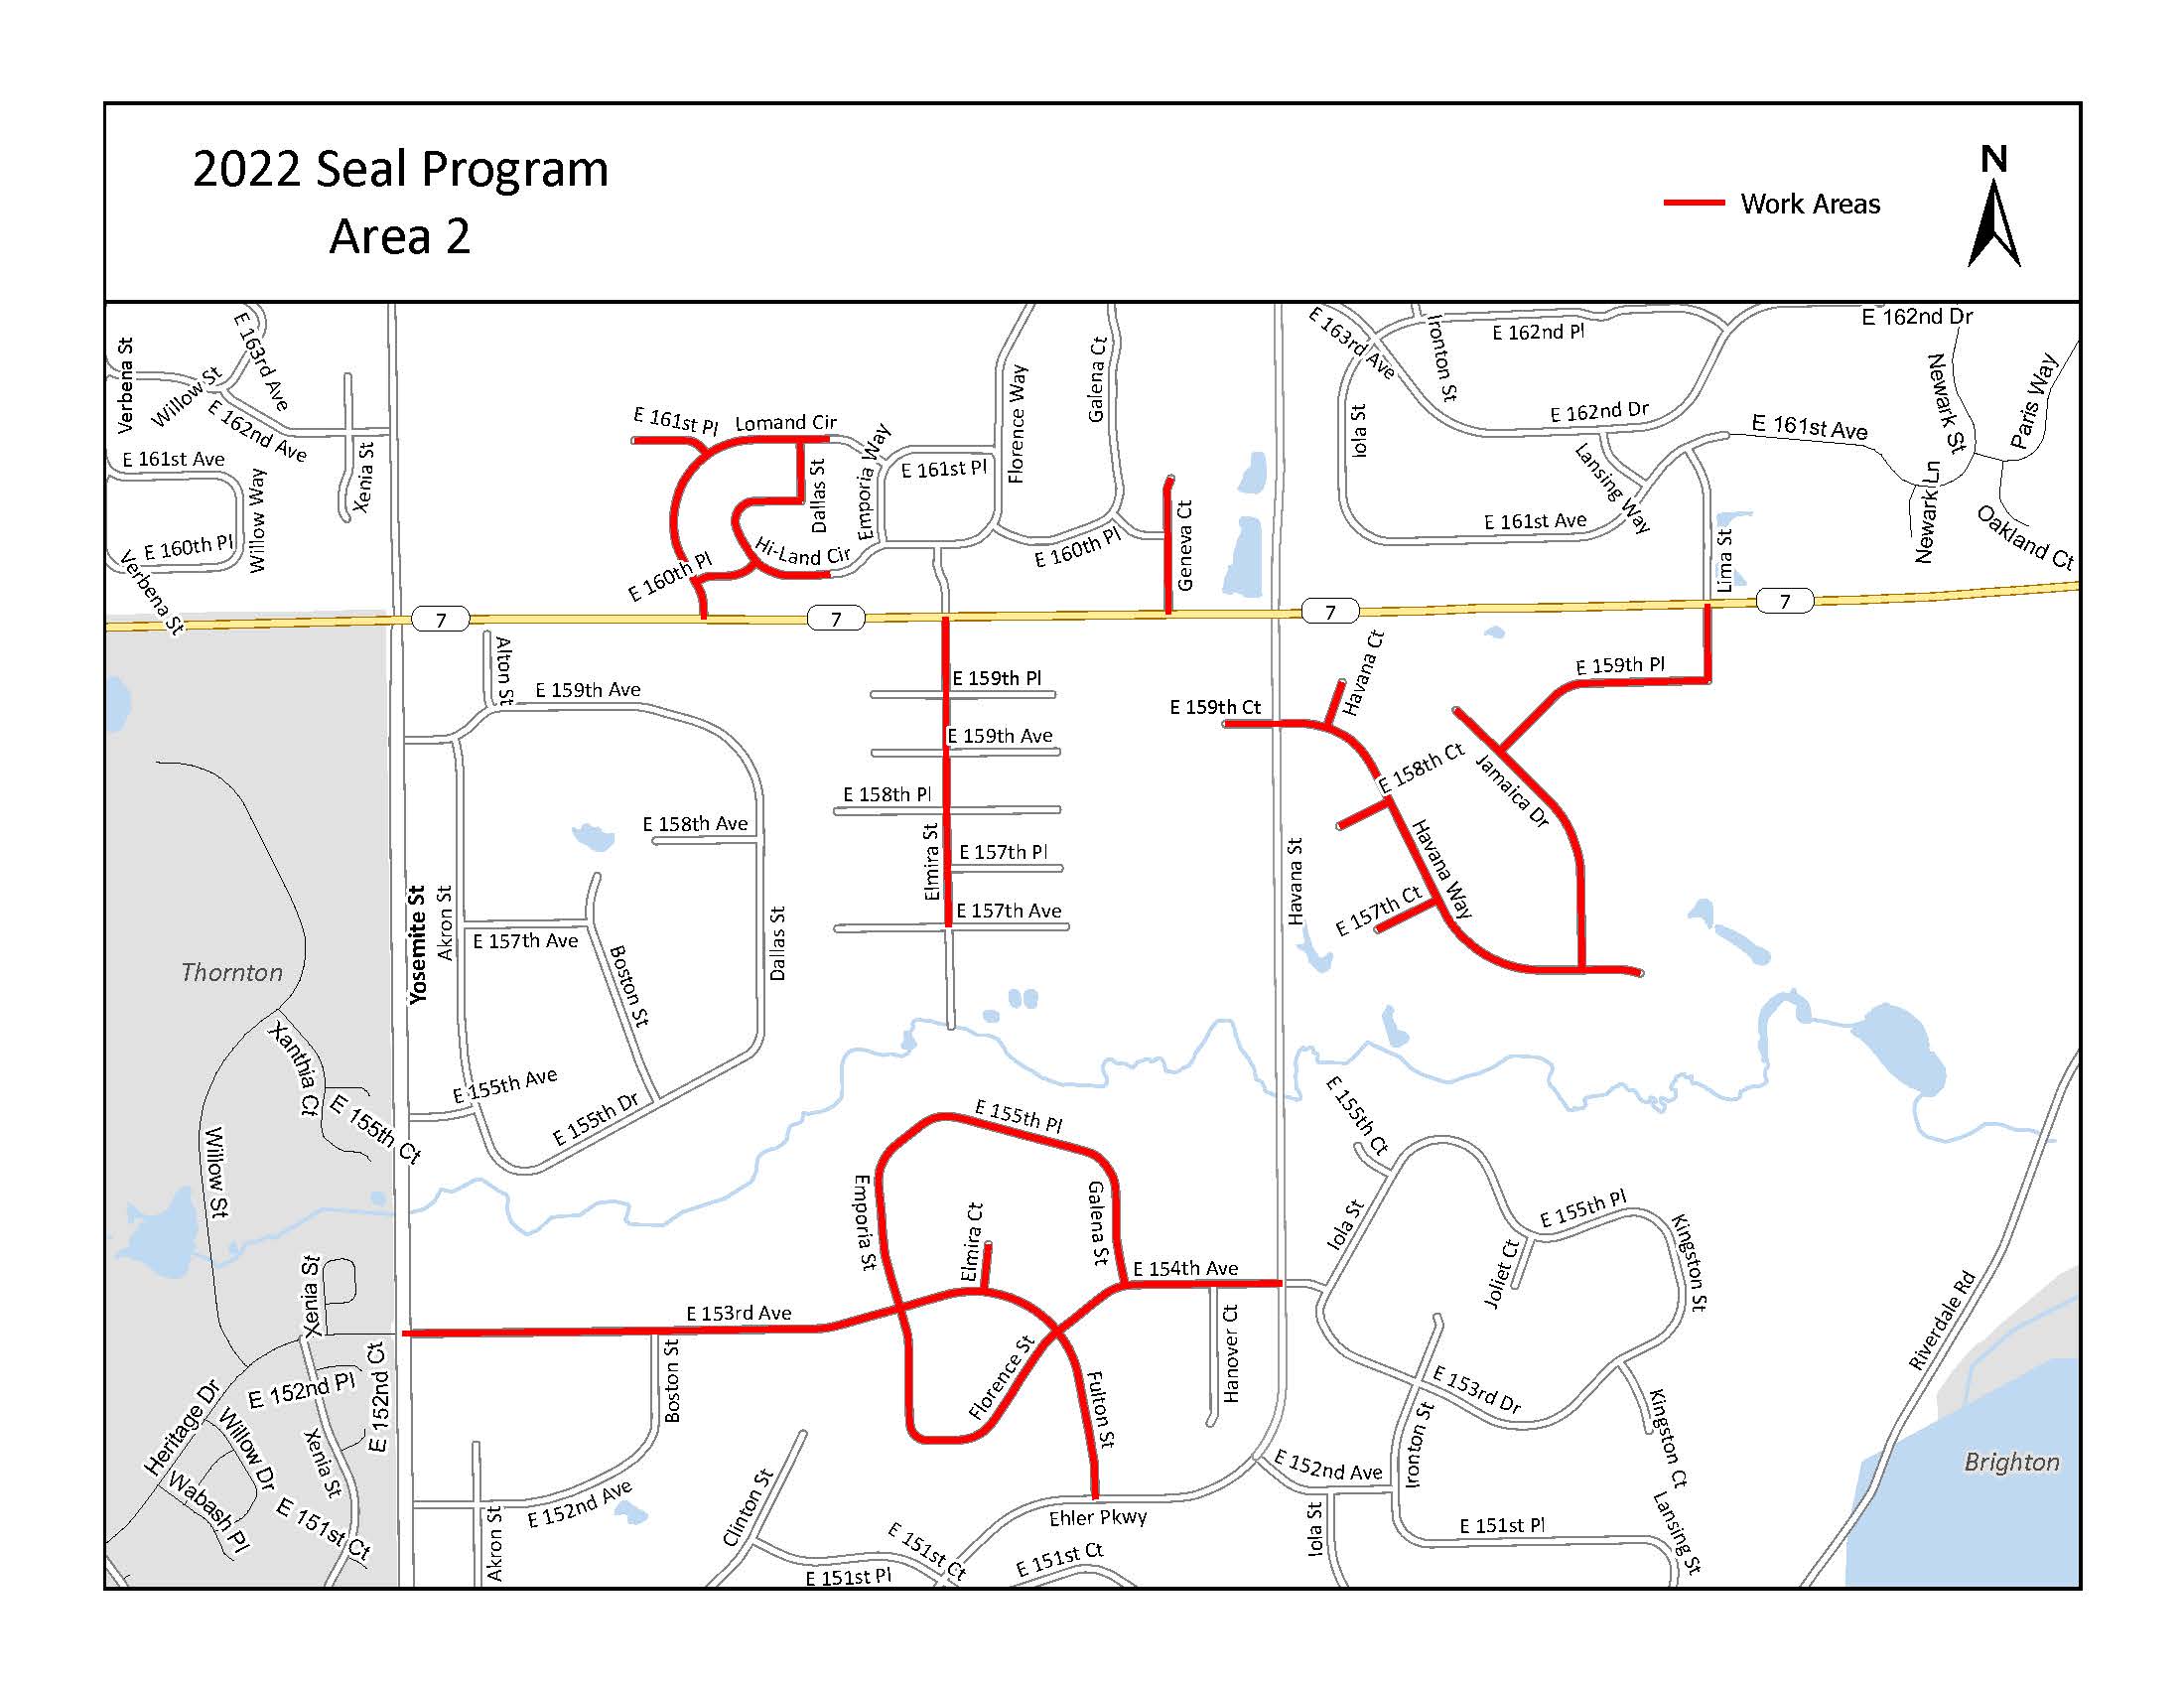 2022 Street Seal Program - Area 2